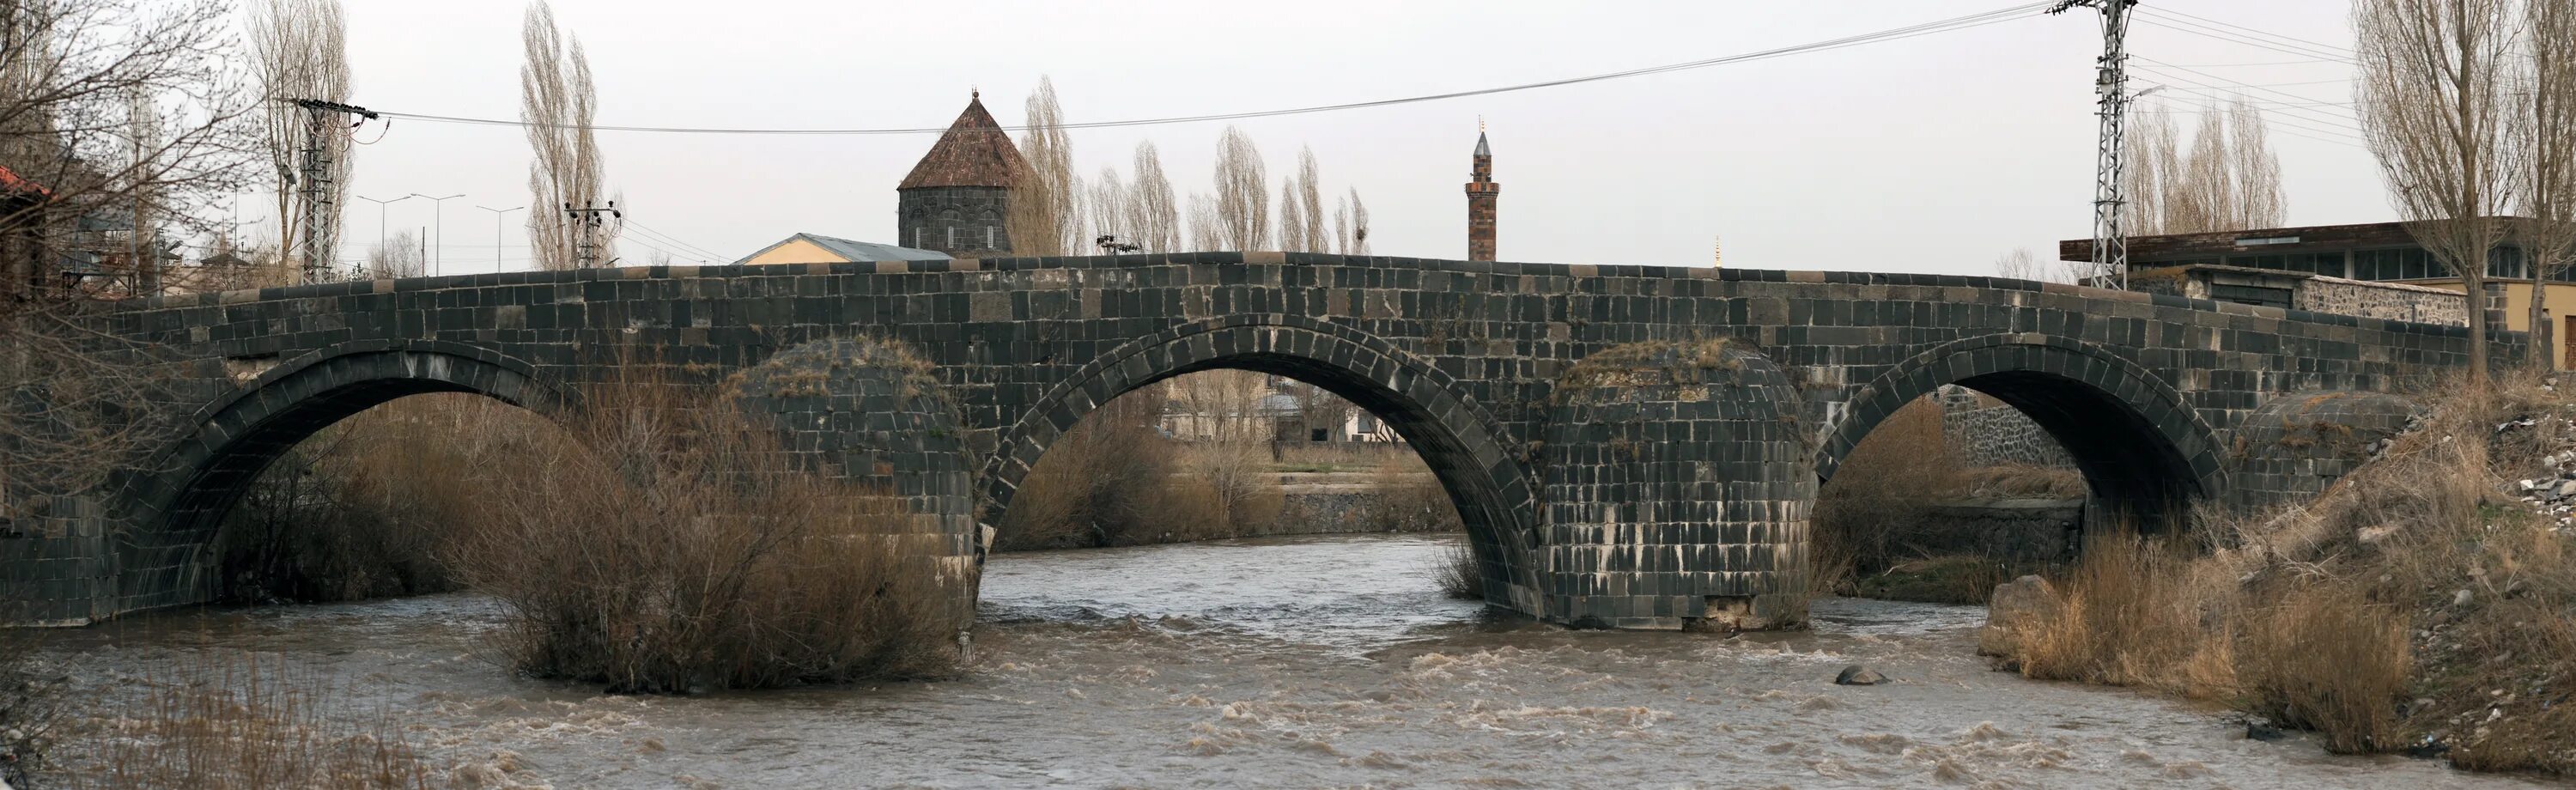 Карс ардаган. Санаинский мост Армения. Карс Турция река. Каменный мост (Таш Кепрю). Село каменный мост Амасия Армения.